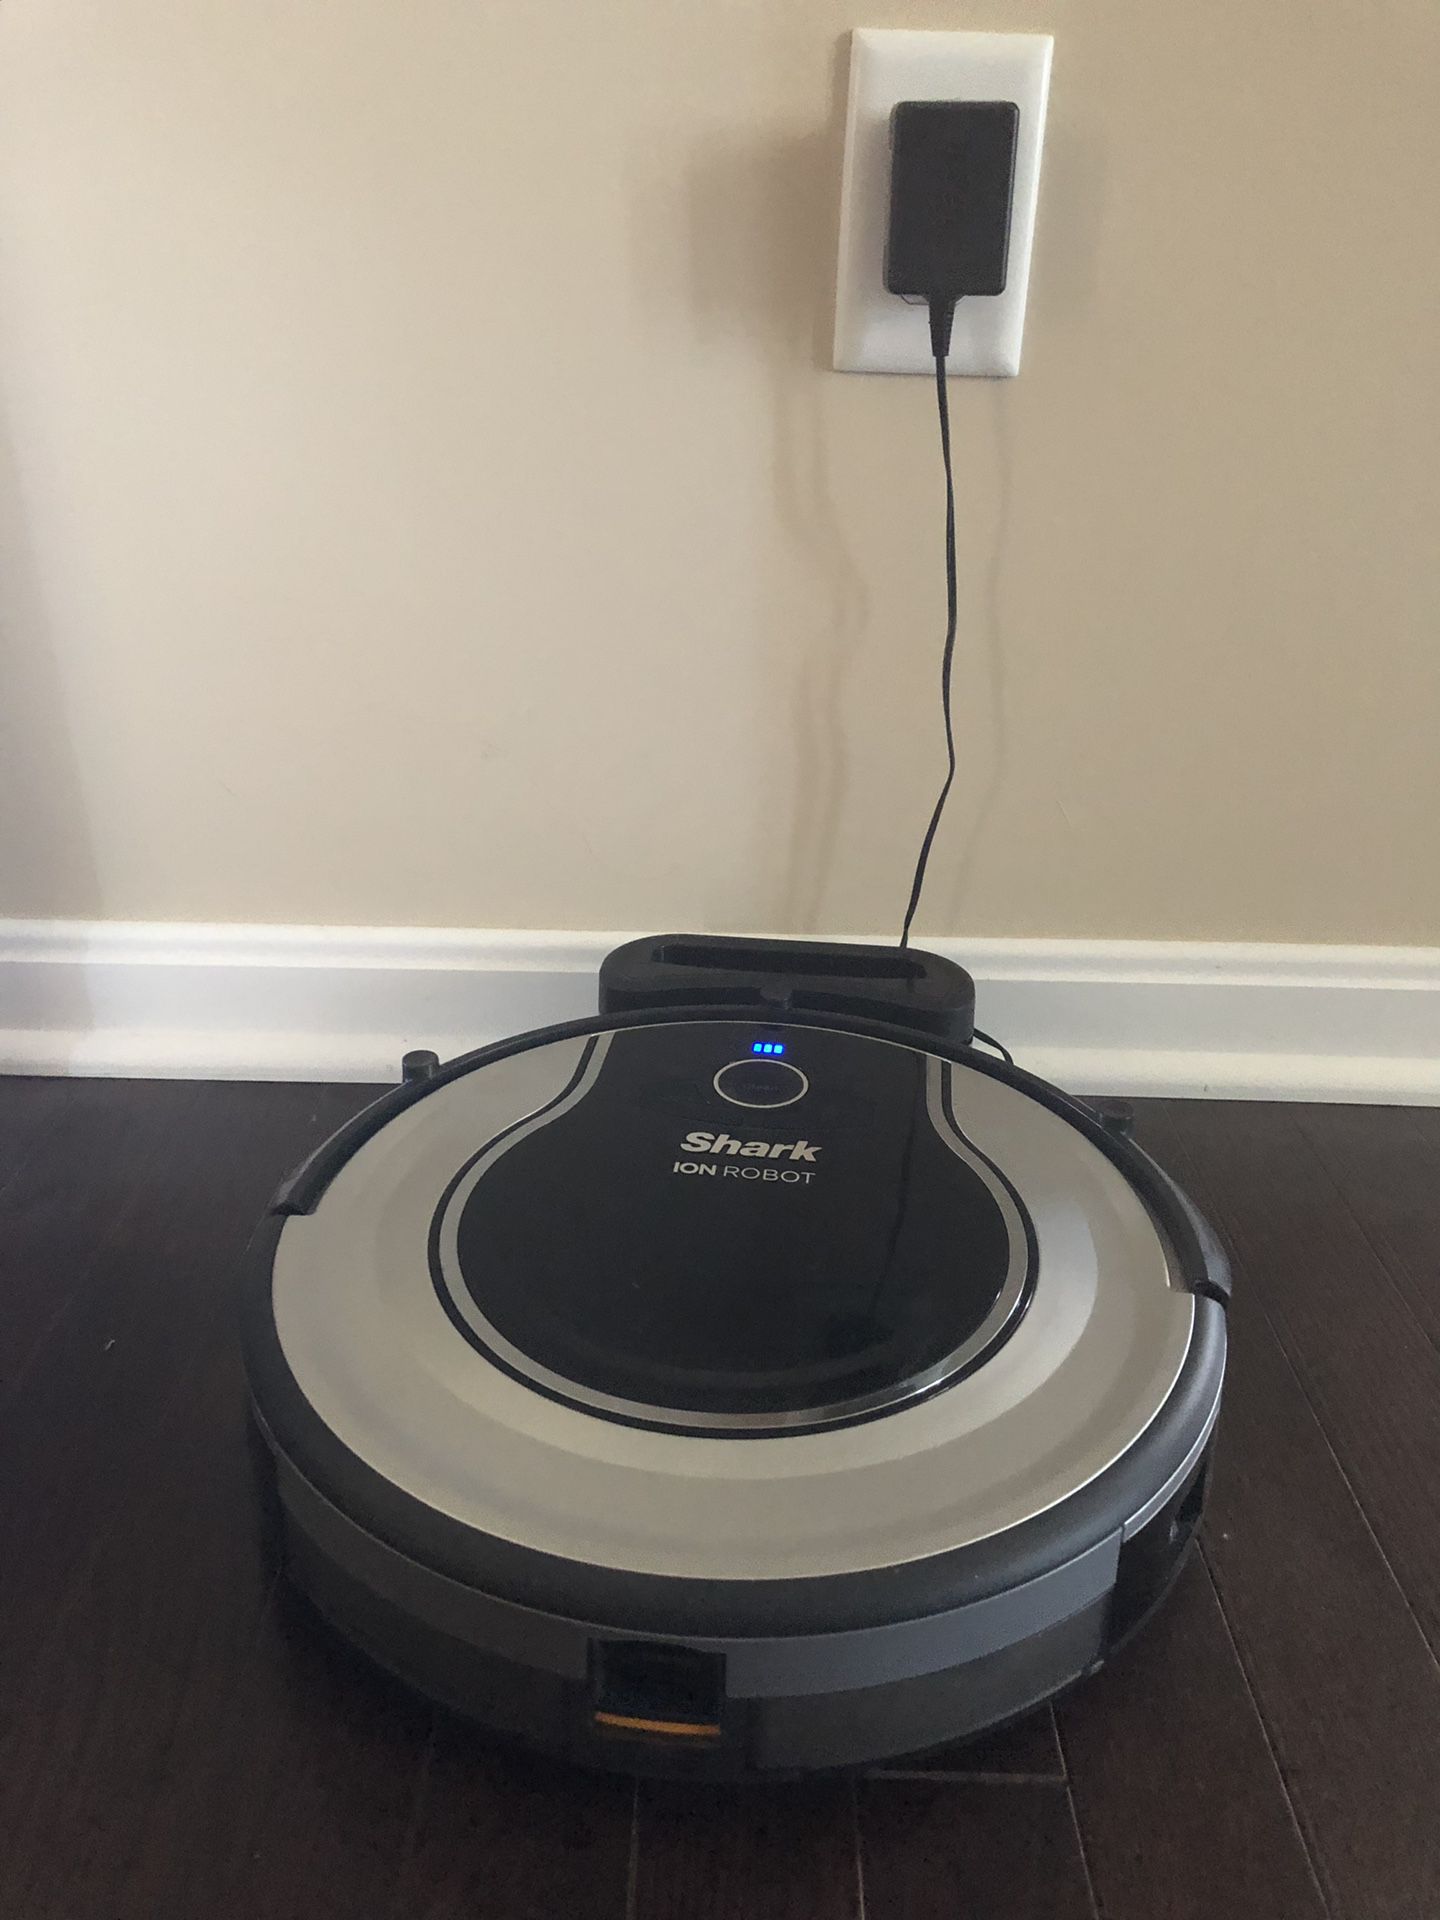 I-robot vacuum